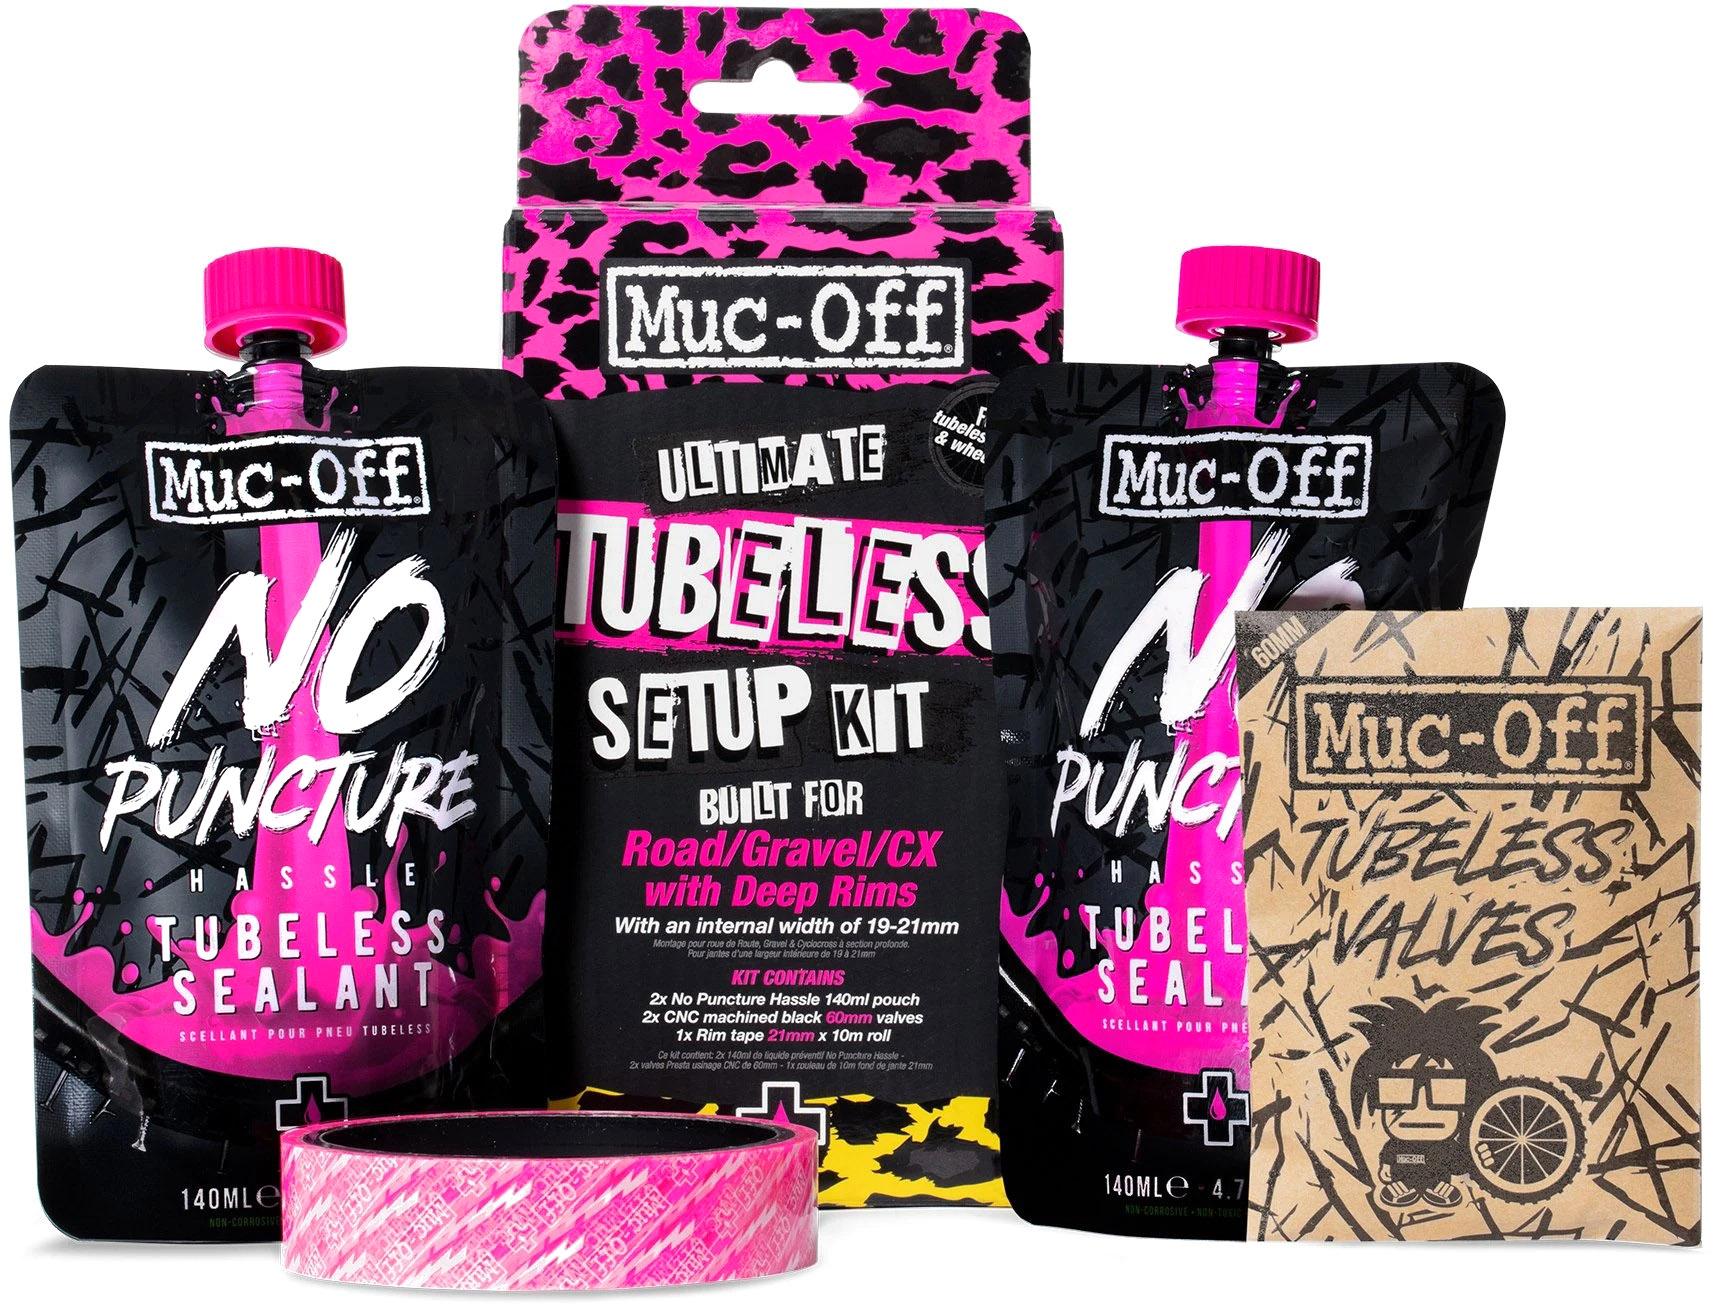 Muc-off Ultimate Tubeless Xc-gravel Setup Kit 2021  Black/pink